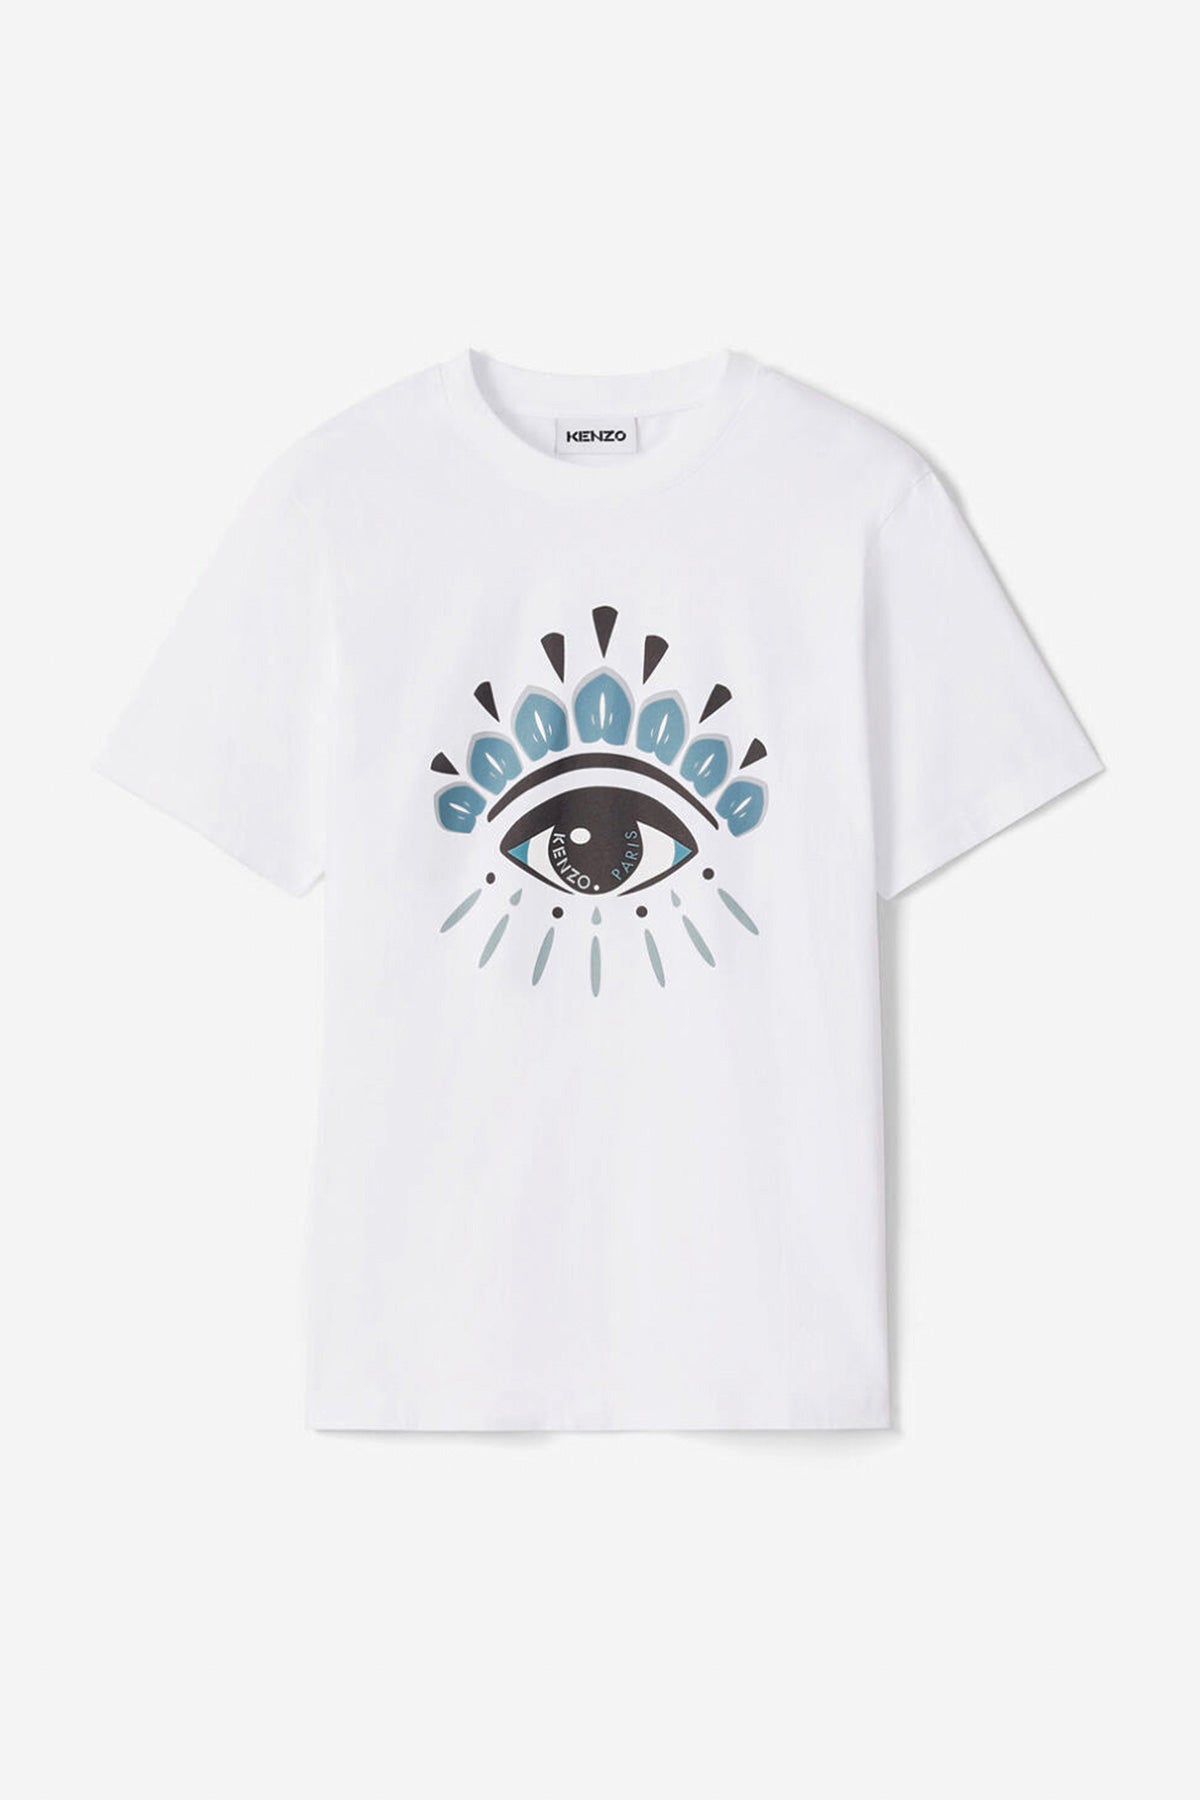 Kenzo Göz T-shirt-Libas Trendy Fashion Store